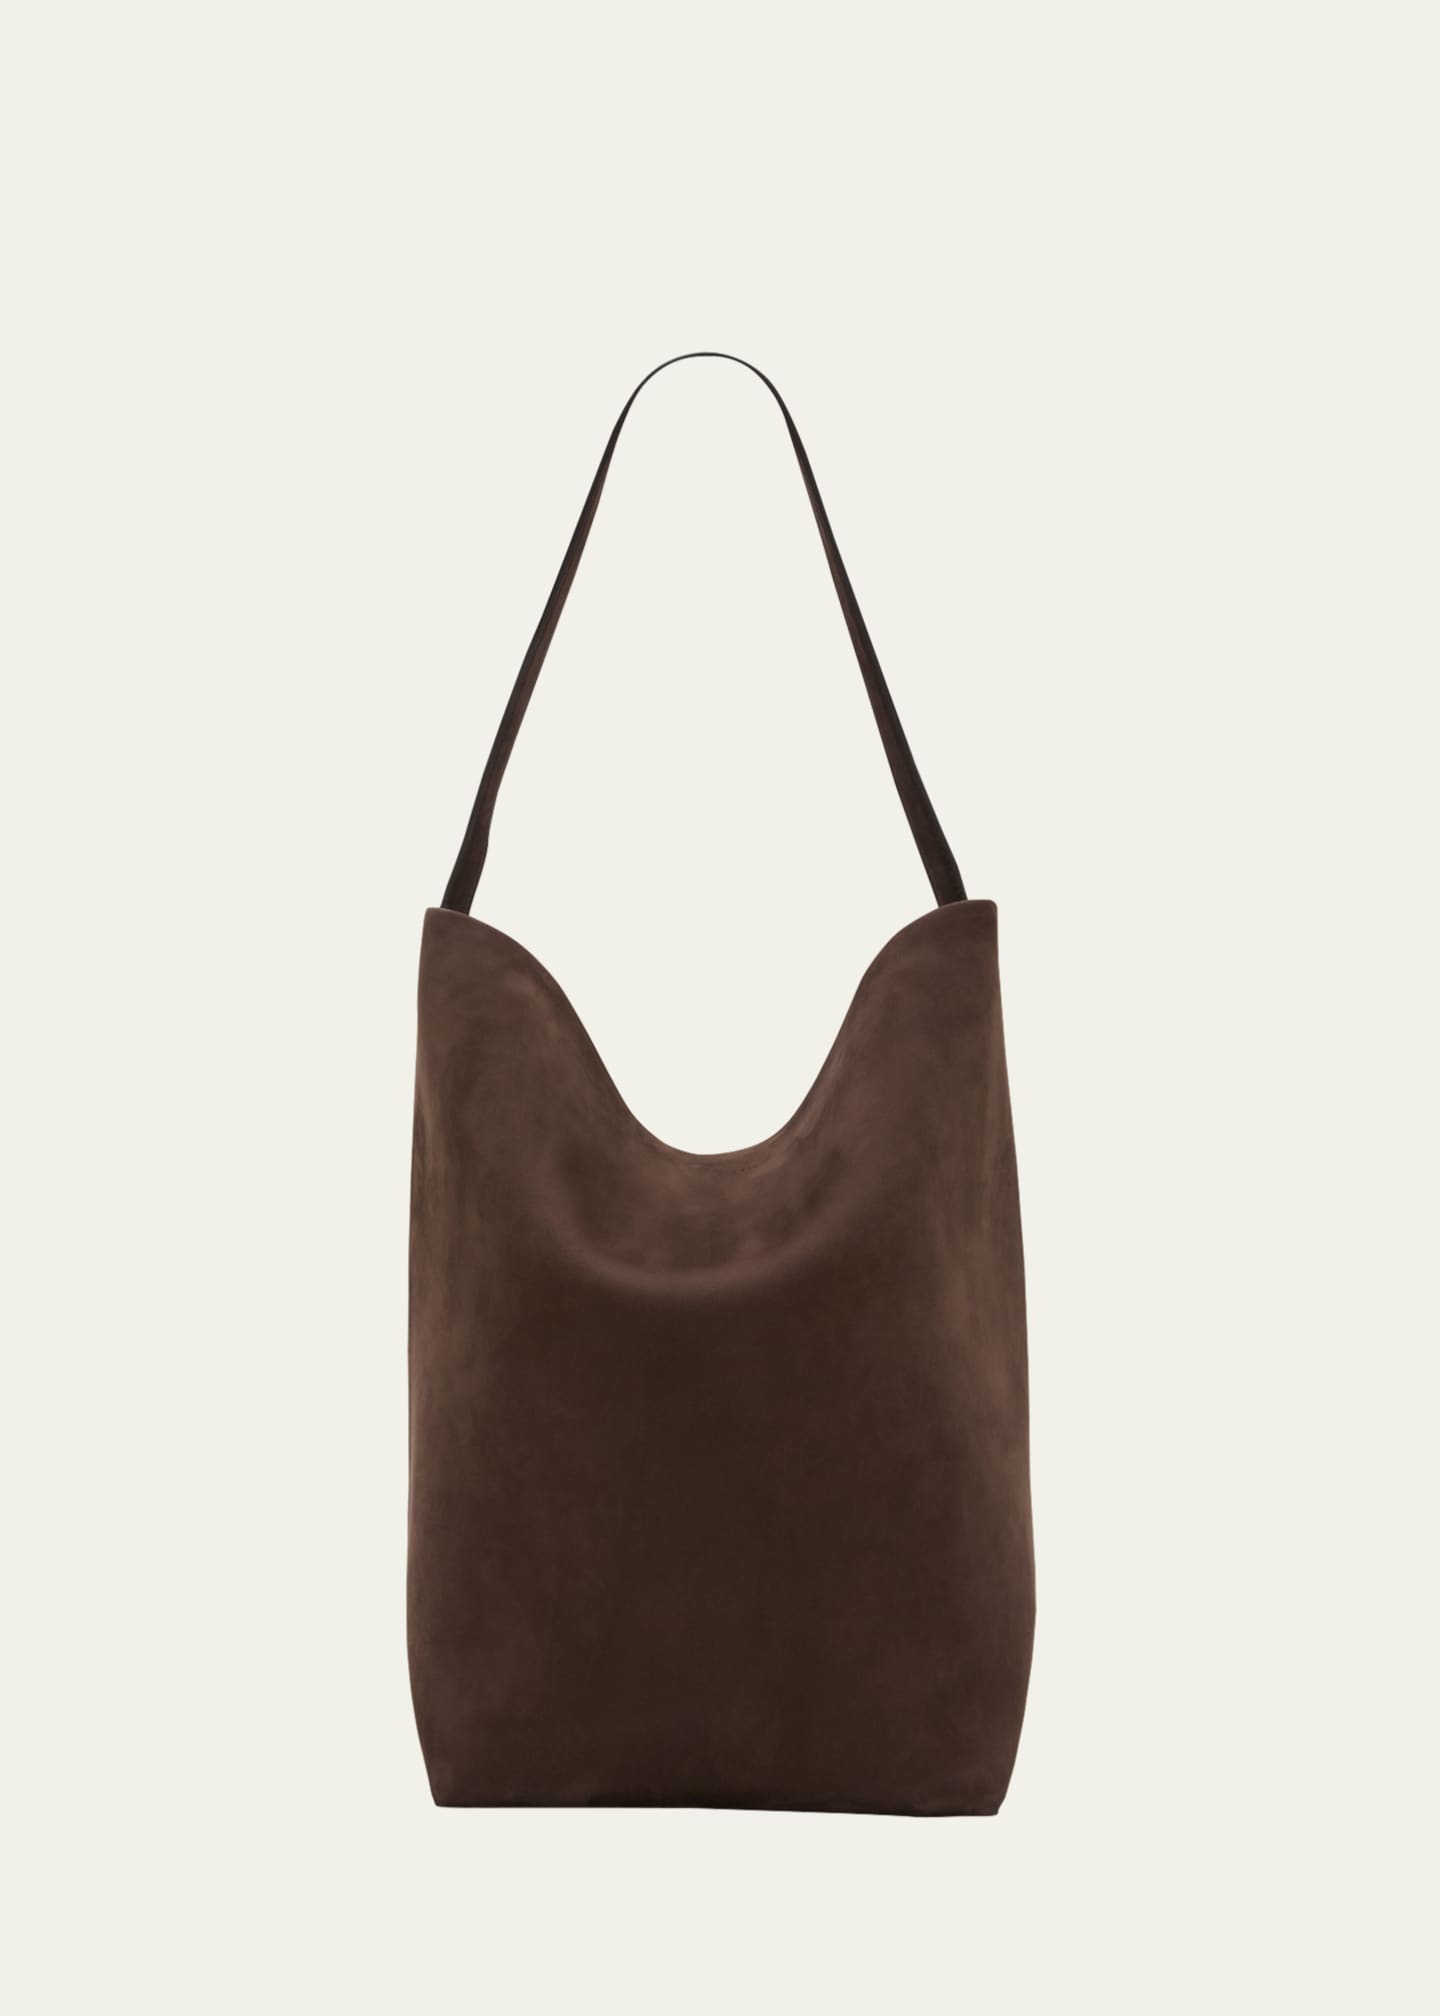 Designer Bags : Leather Goods & iPhone Cases at Bergdorf Goodman